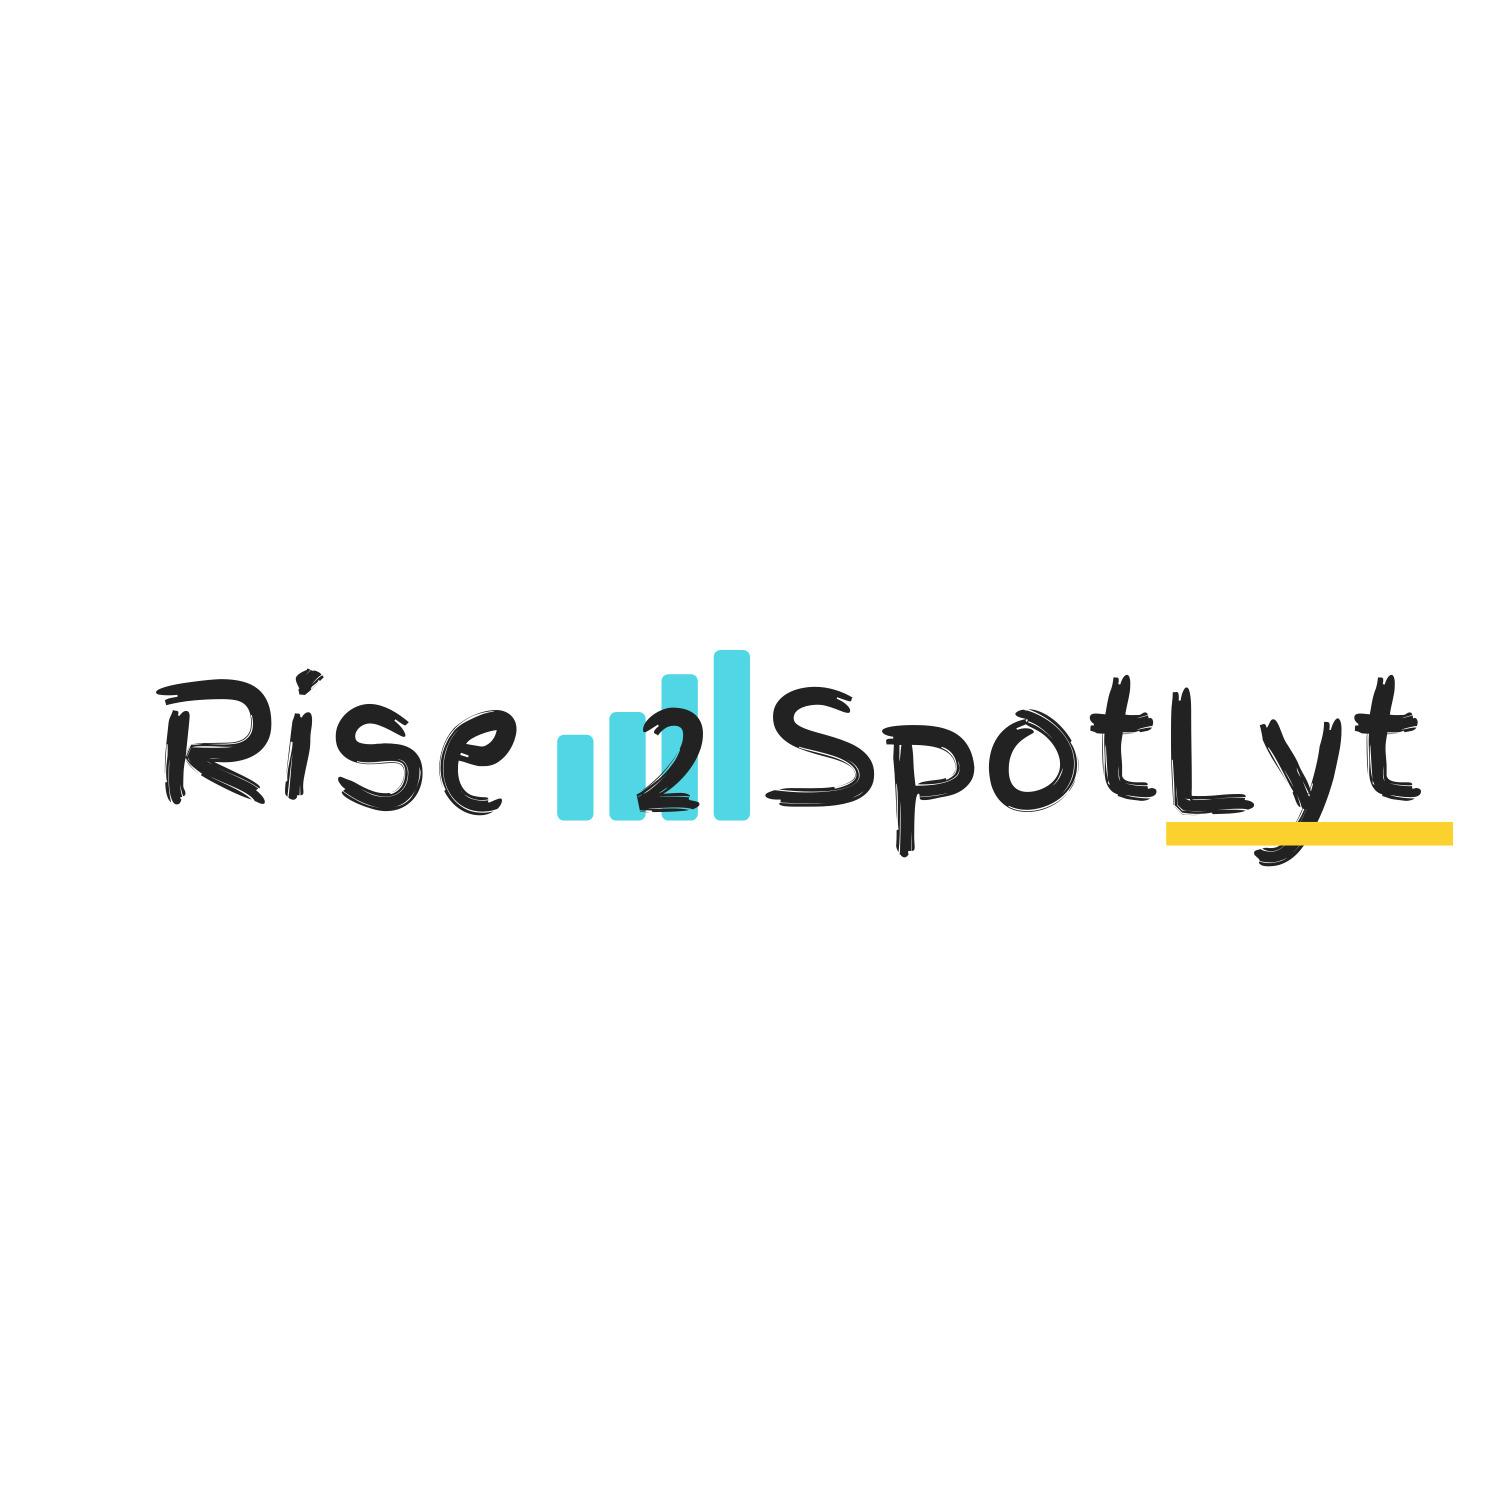 Rise2SpotLyt Talks